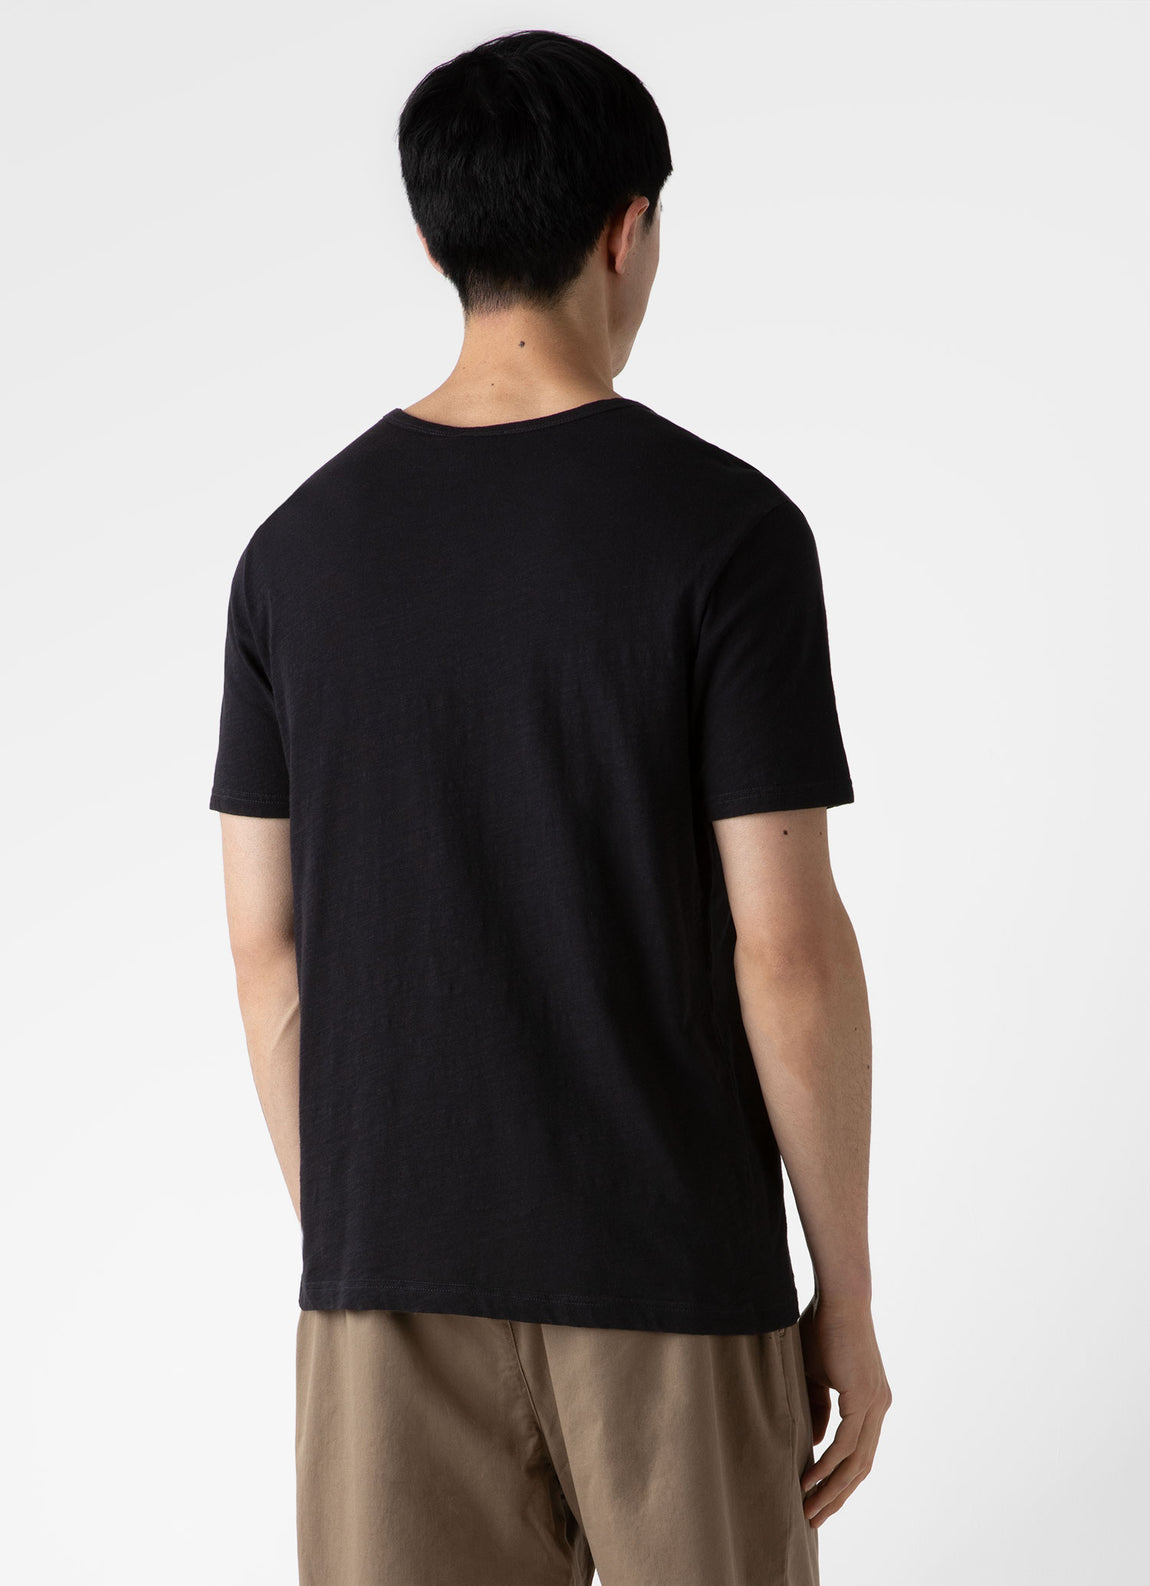 Men's Pima Cotton Linen T-shirt in Black | Sunspel